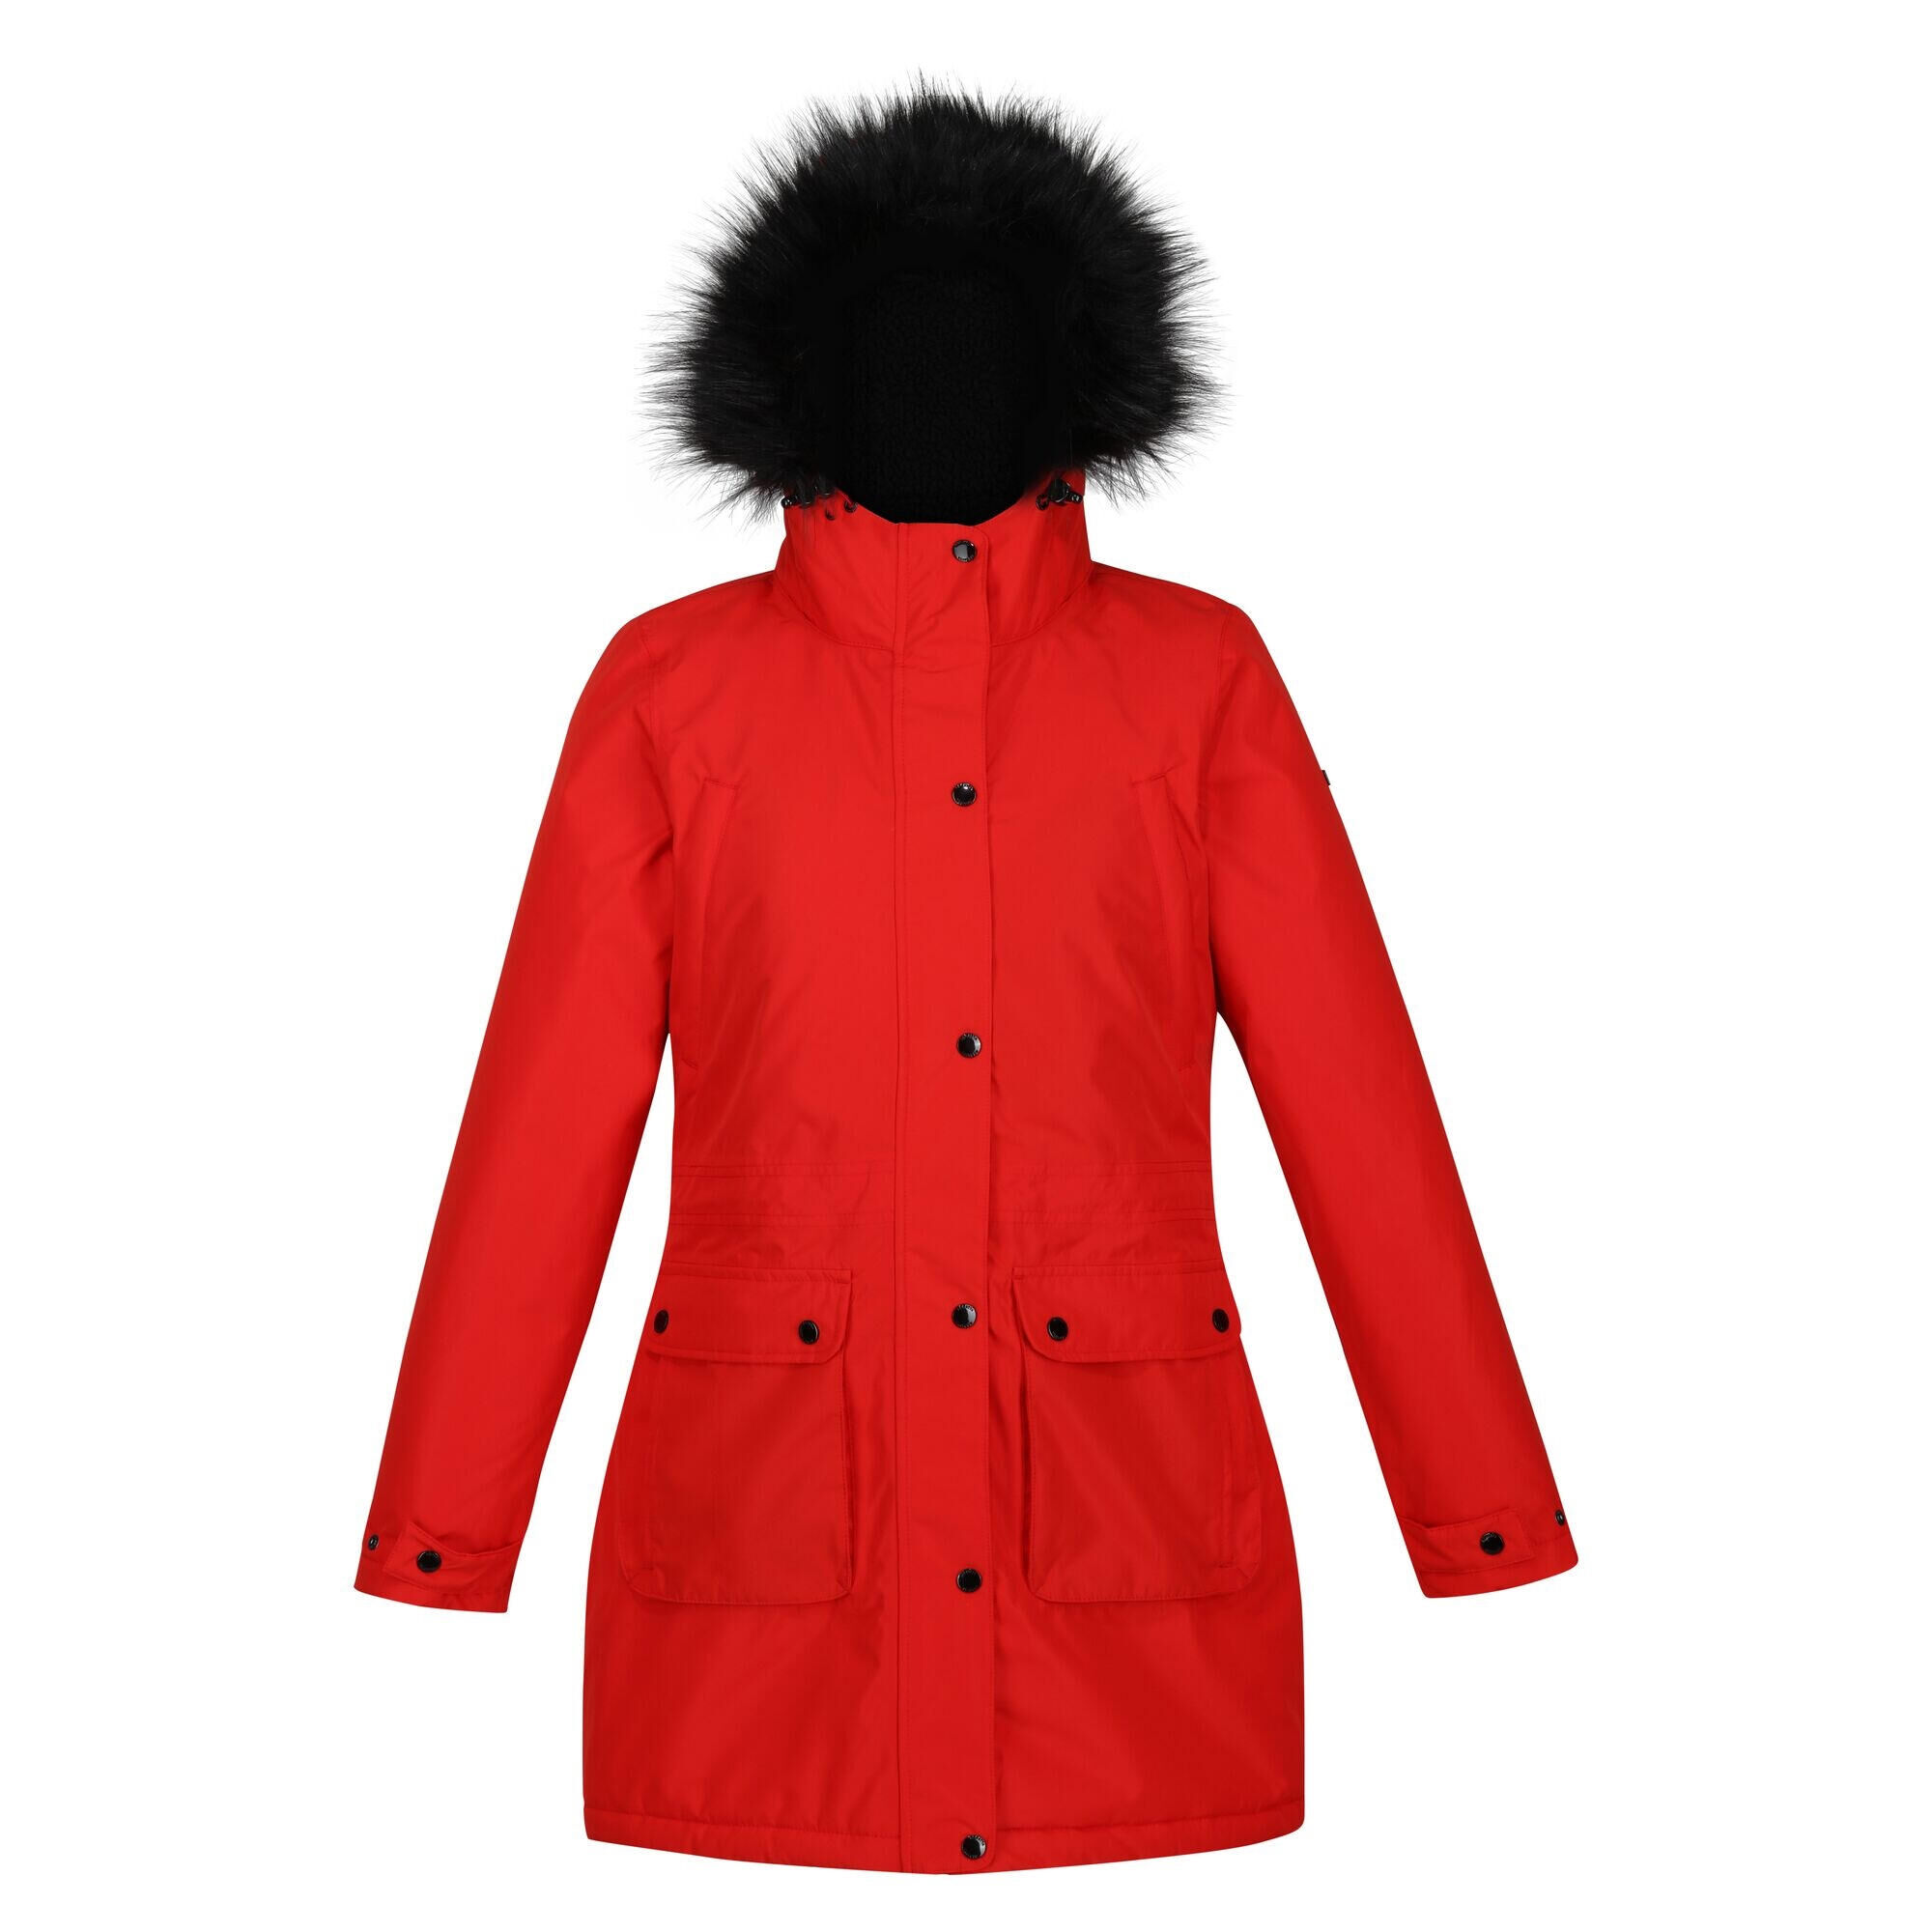 REGATTA Womens/Ladies Voltera Heated Waterproof Jacket (Code Red)